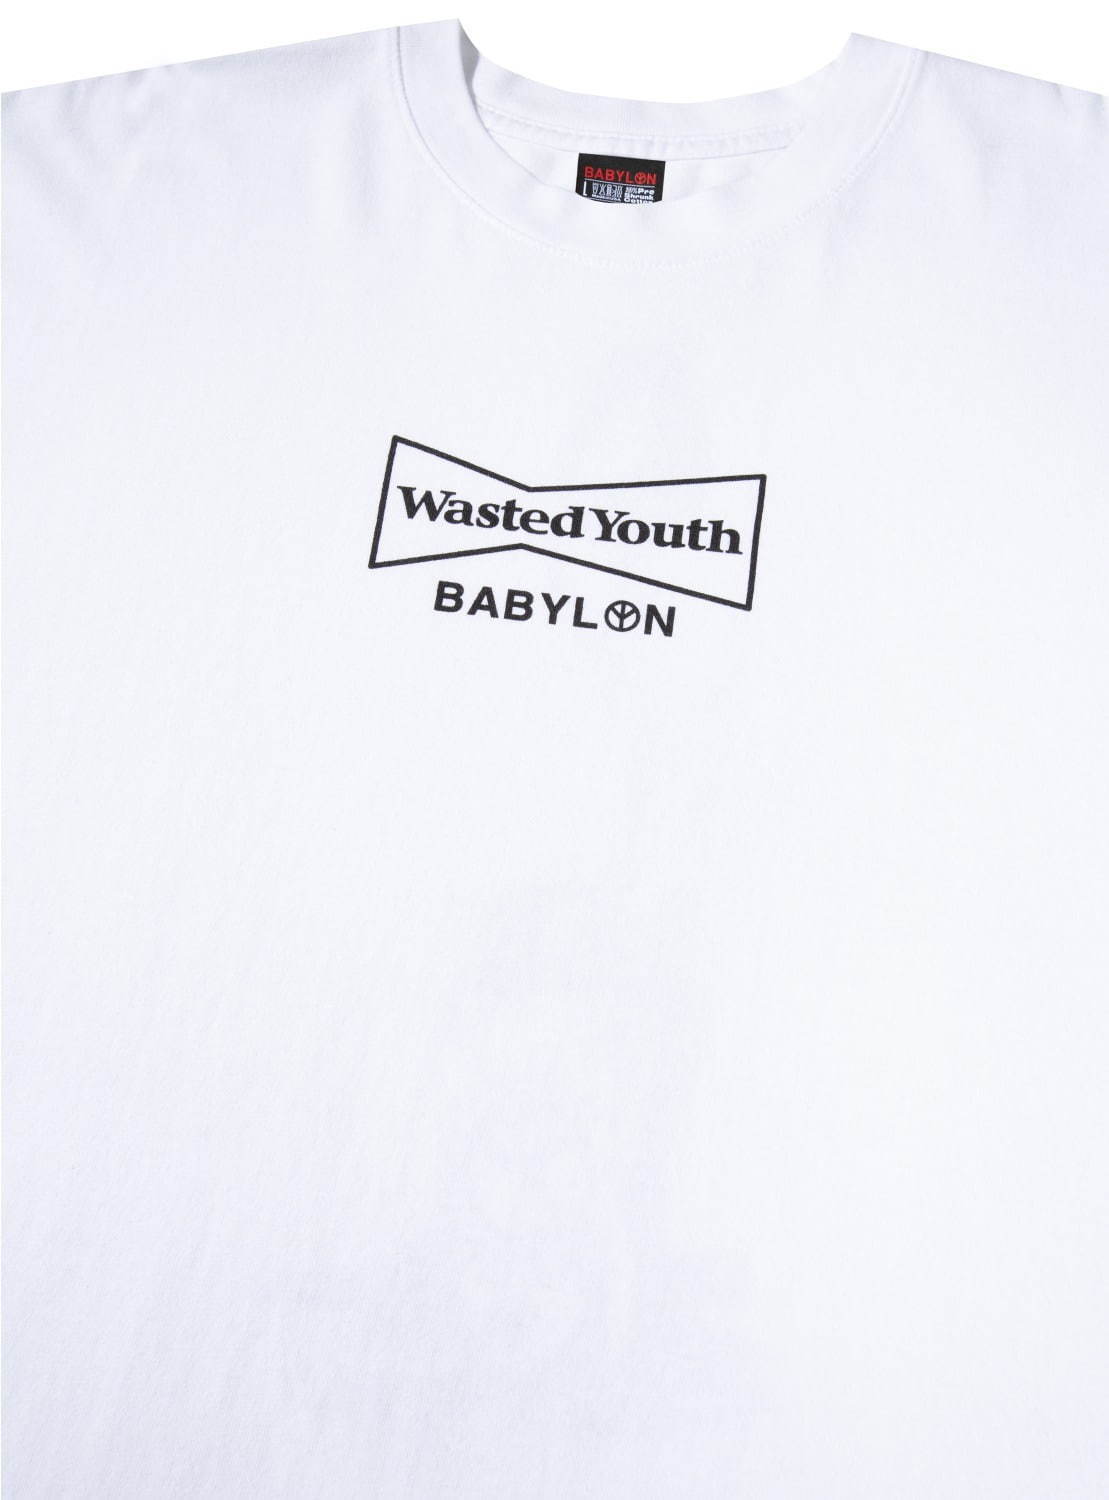 BABYLON wastedyouth Tシャツ L | hartwellspremium.com